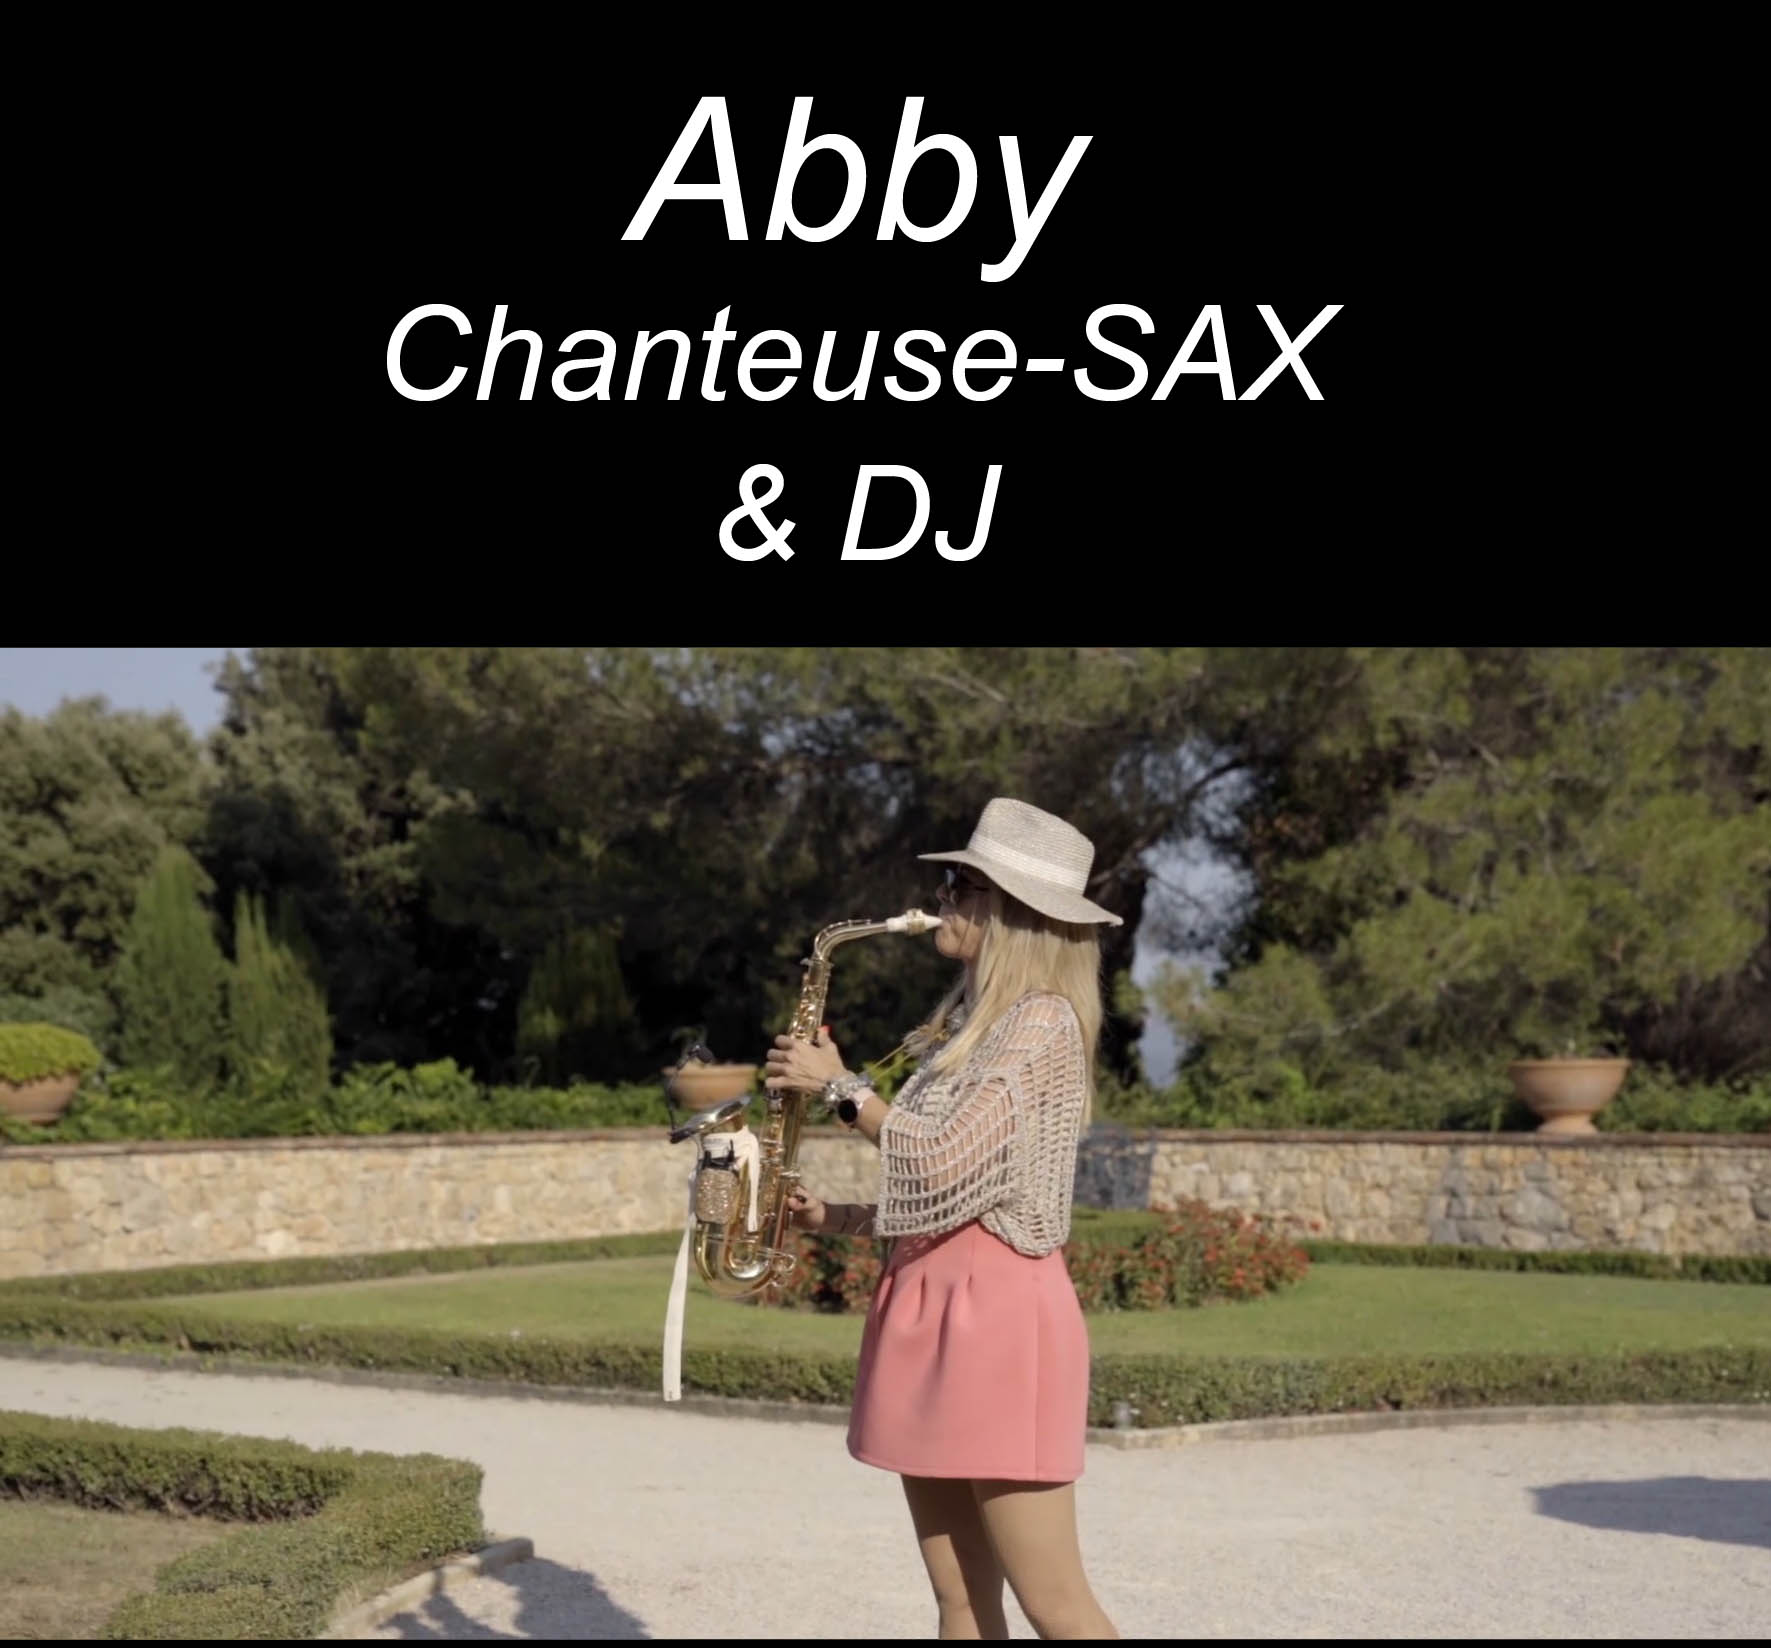 MARIAGE VAR,  ABBY : DJ chanteuse saxophoniste